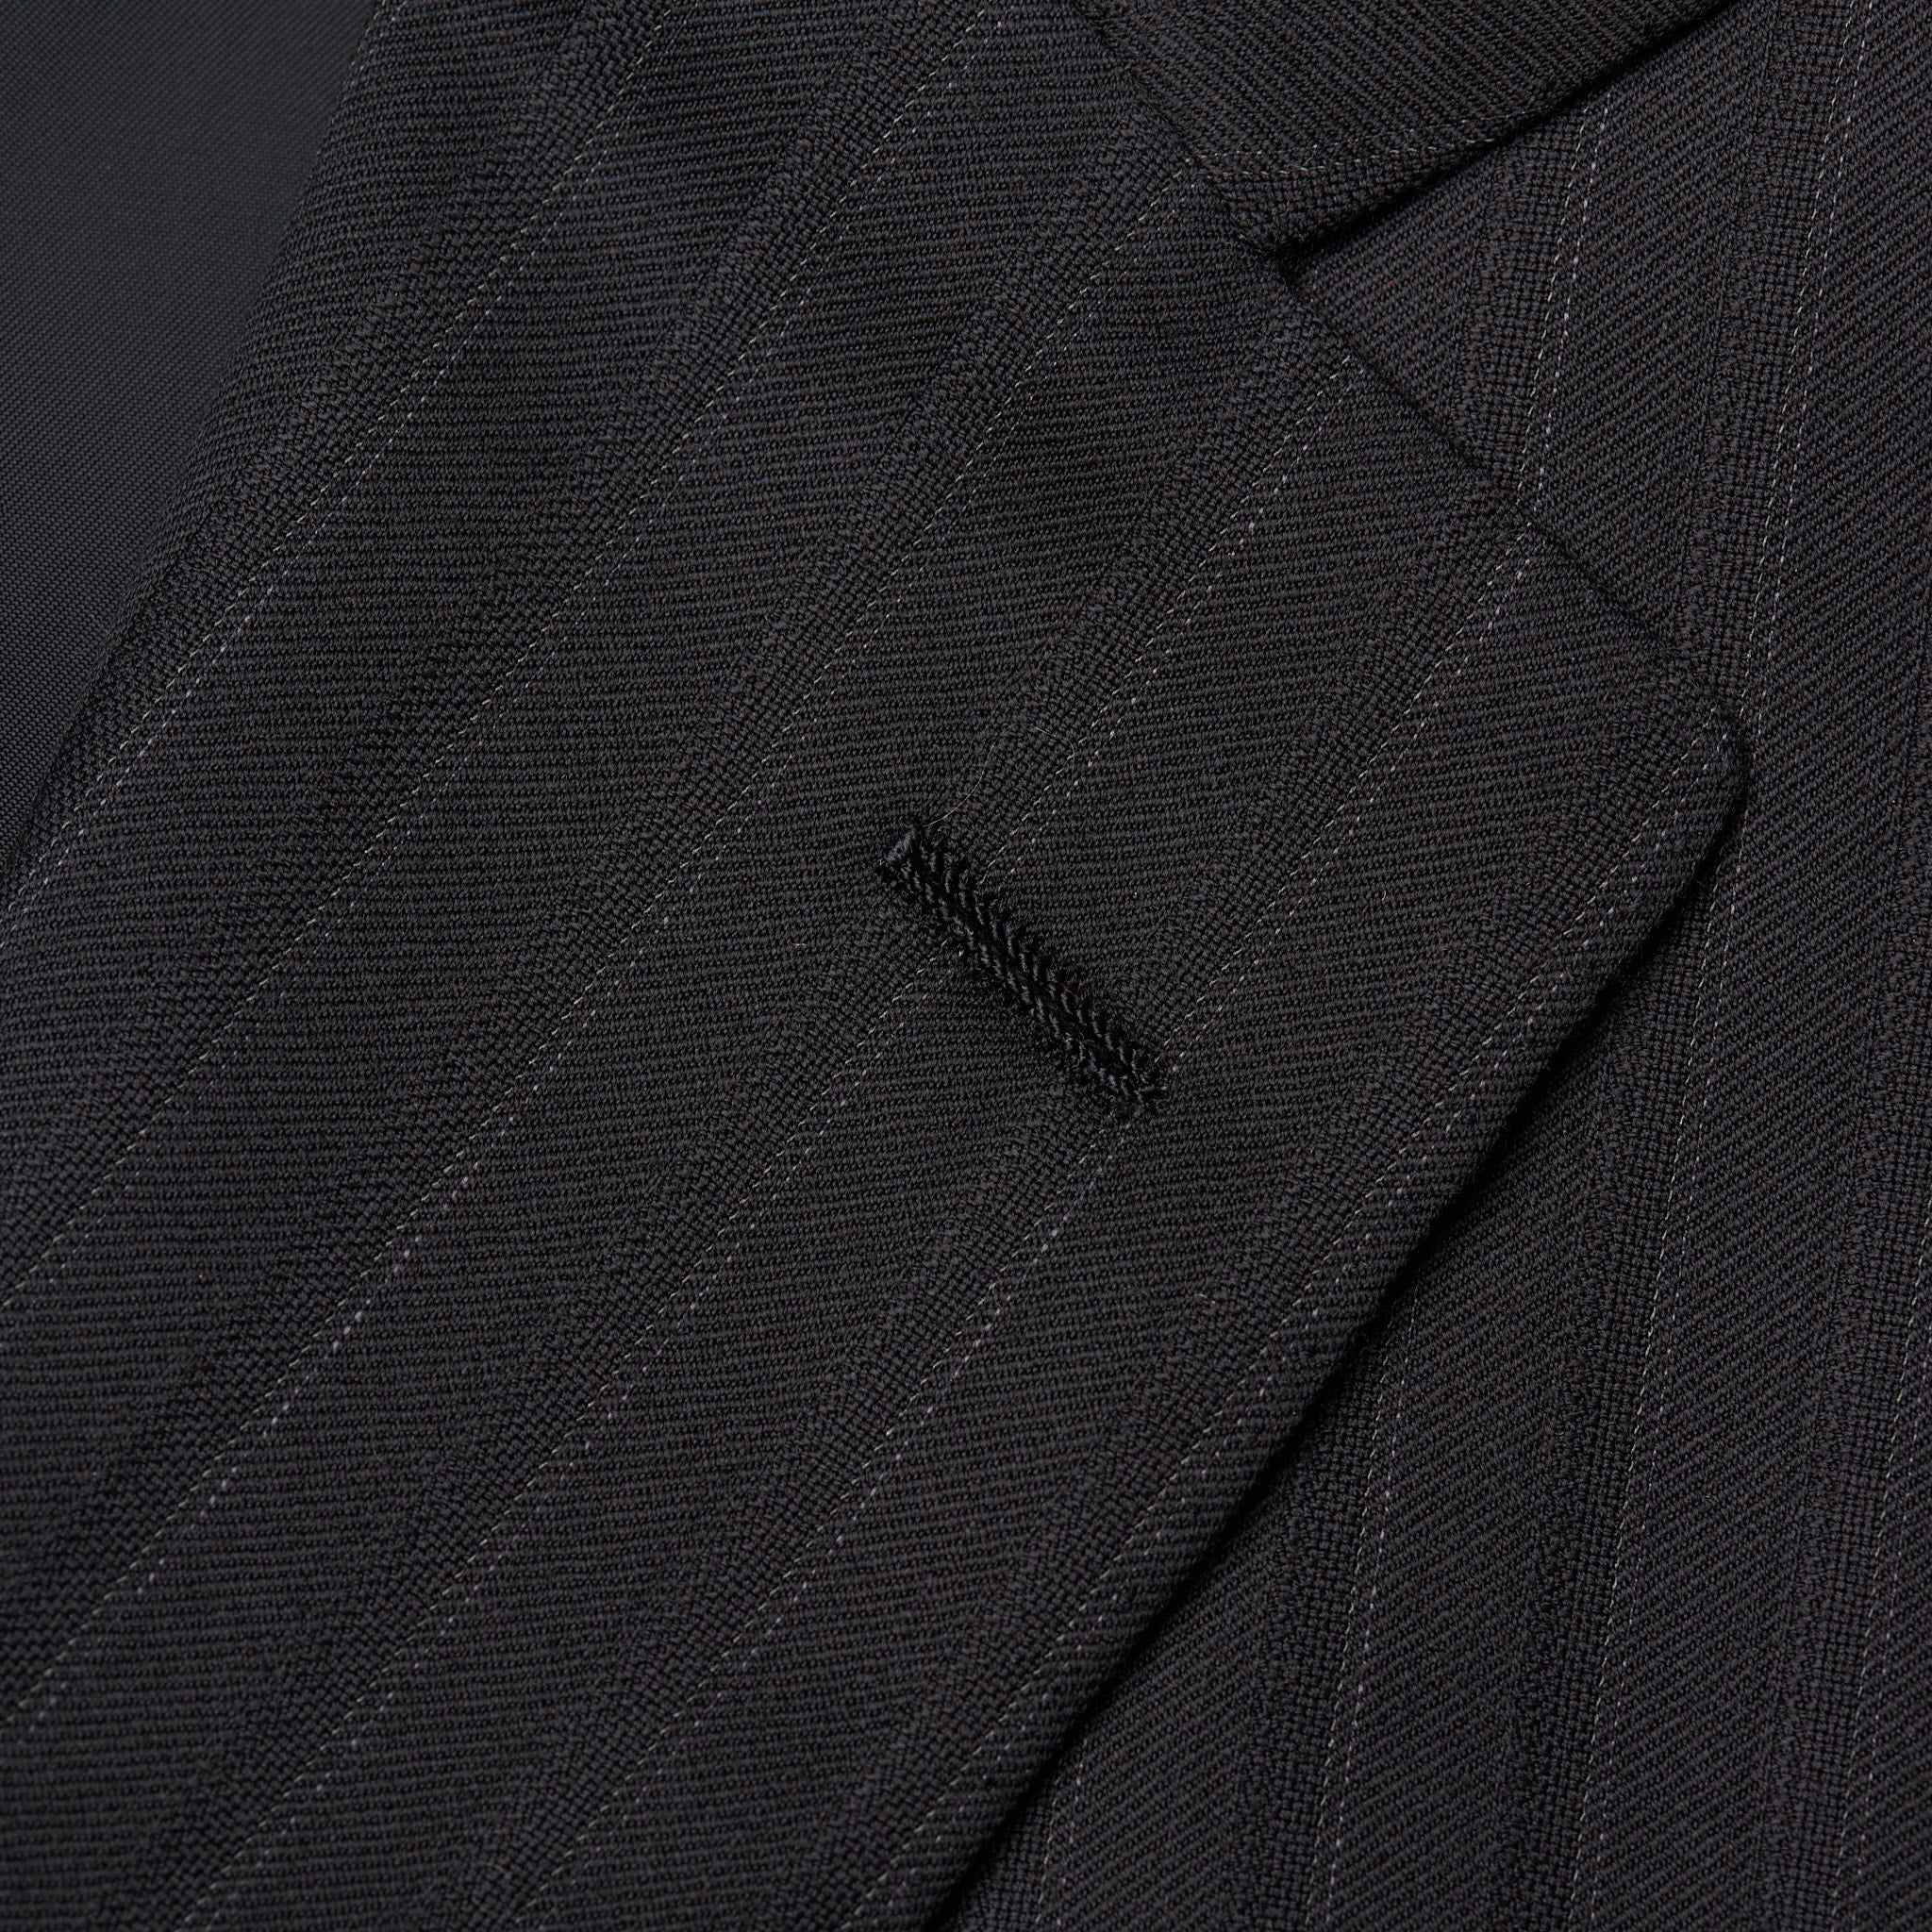 D'AVENZA Roma Handmade Black Striped Wool Suit EU 50 NEW US 40 – SARTORIALE